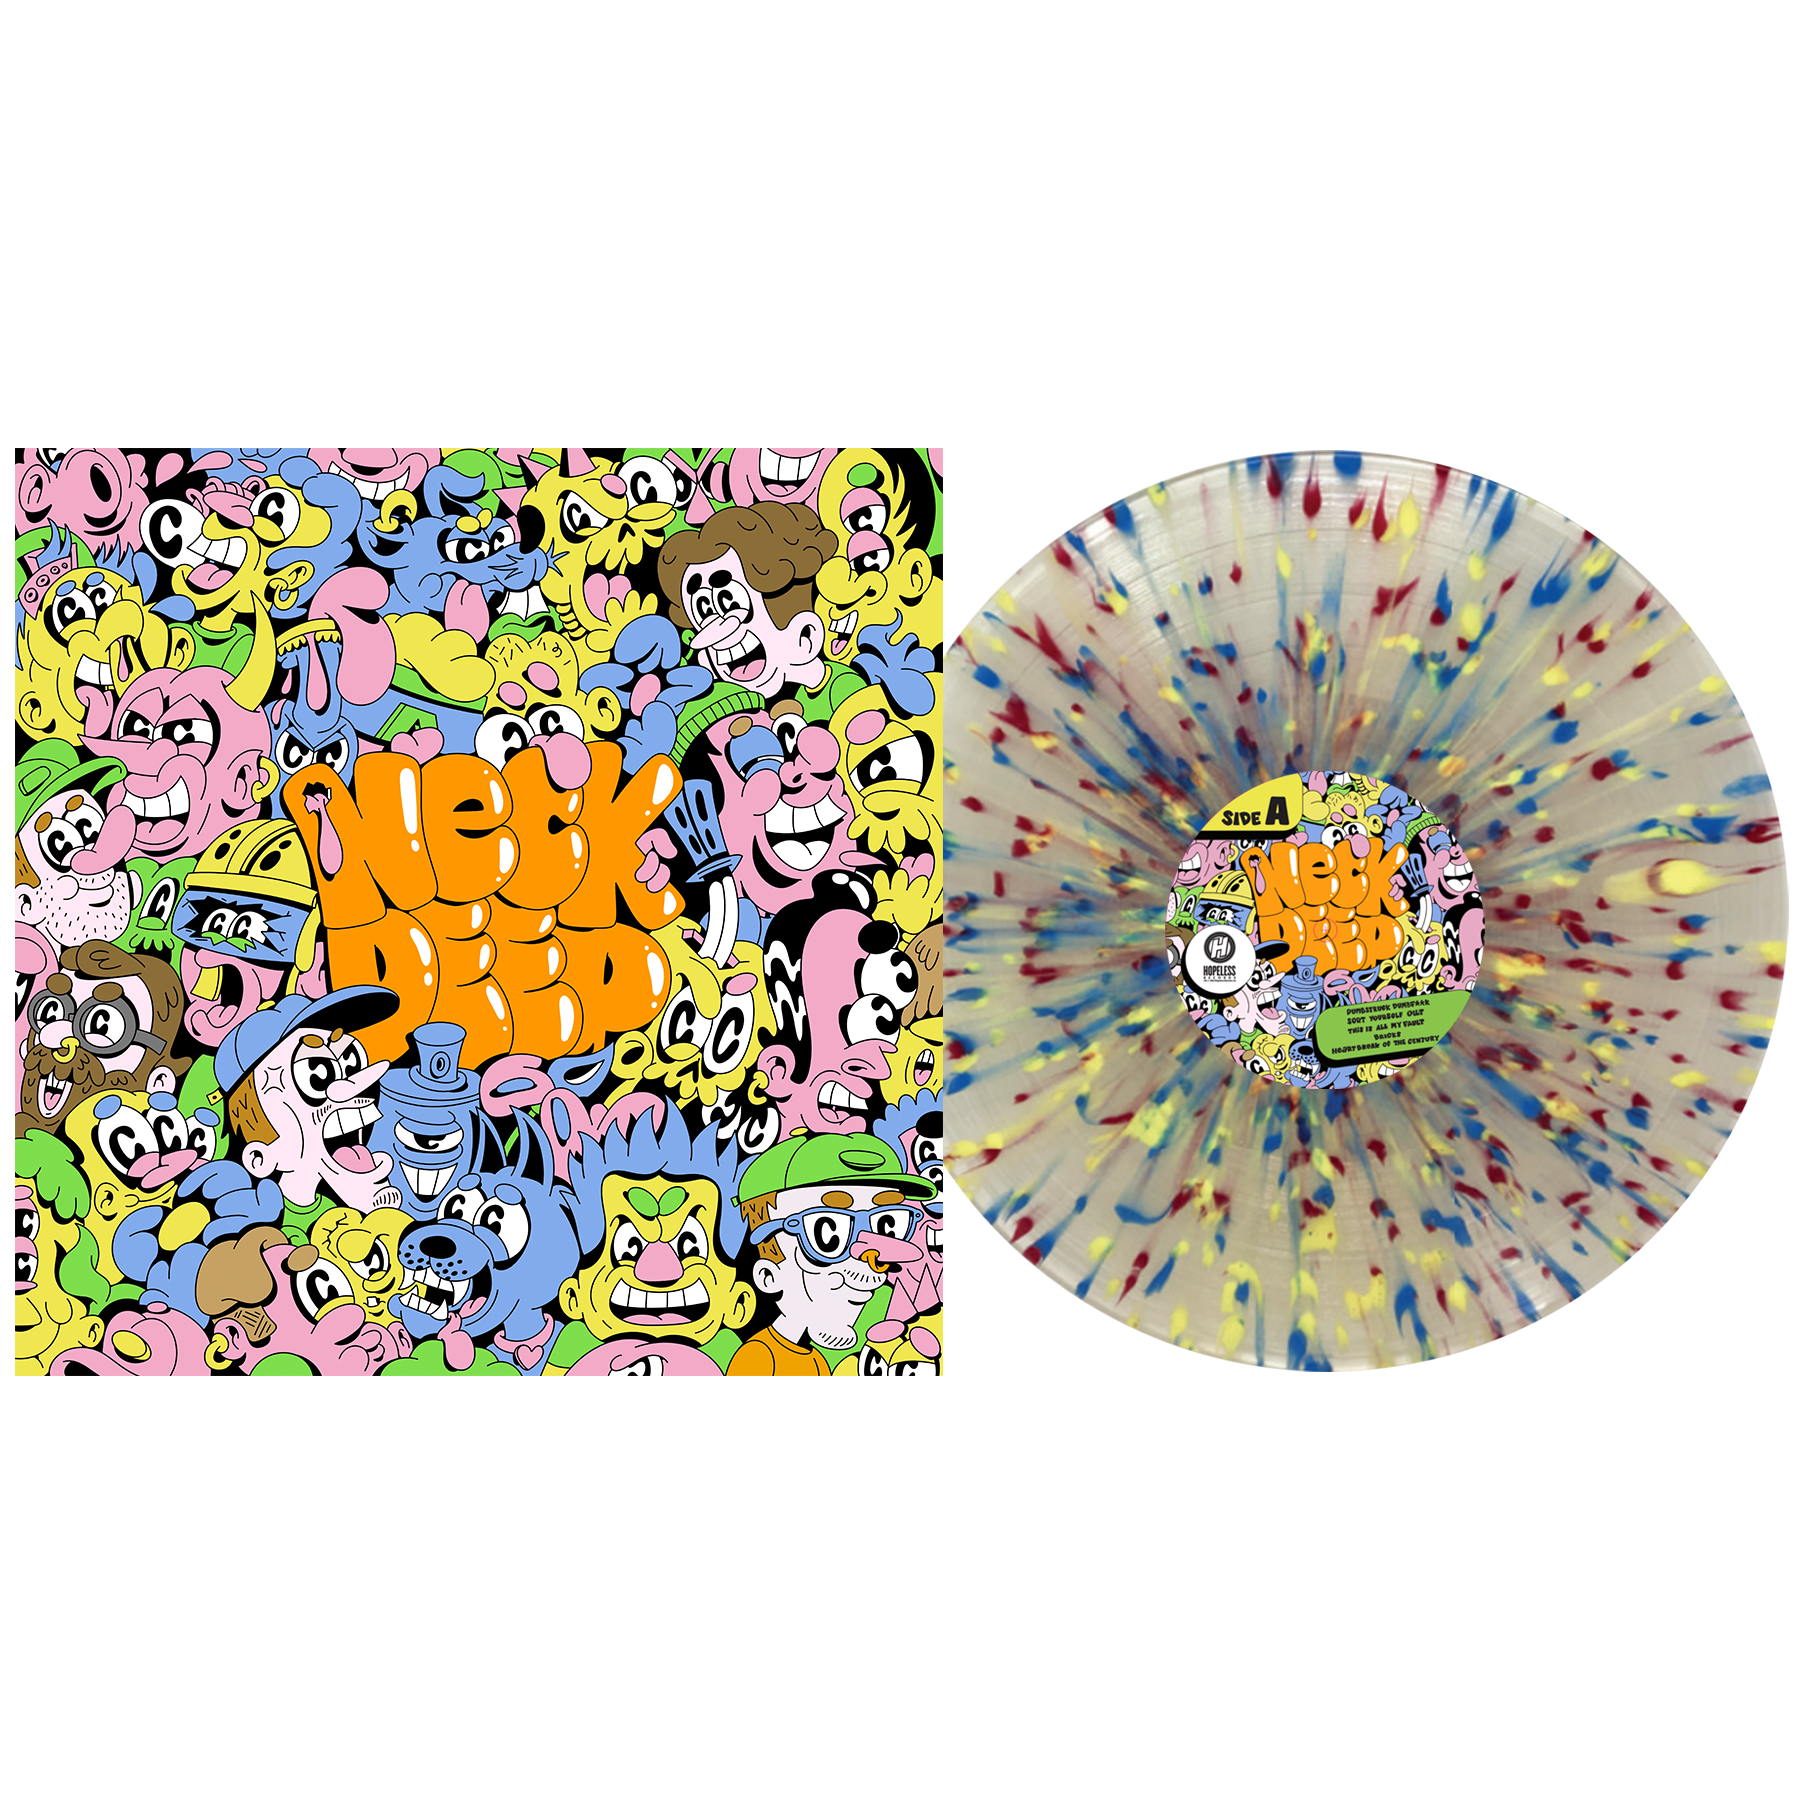 Neck Deep - Neck Deep: Exclusive Clear w/ Red, Blue & Yellow Splatter Vinyl LP